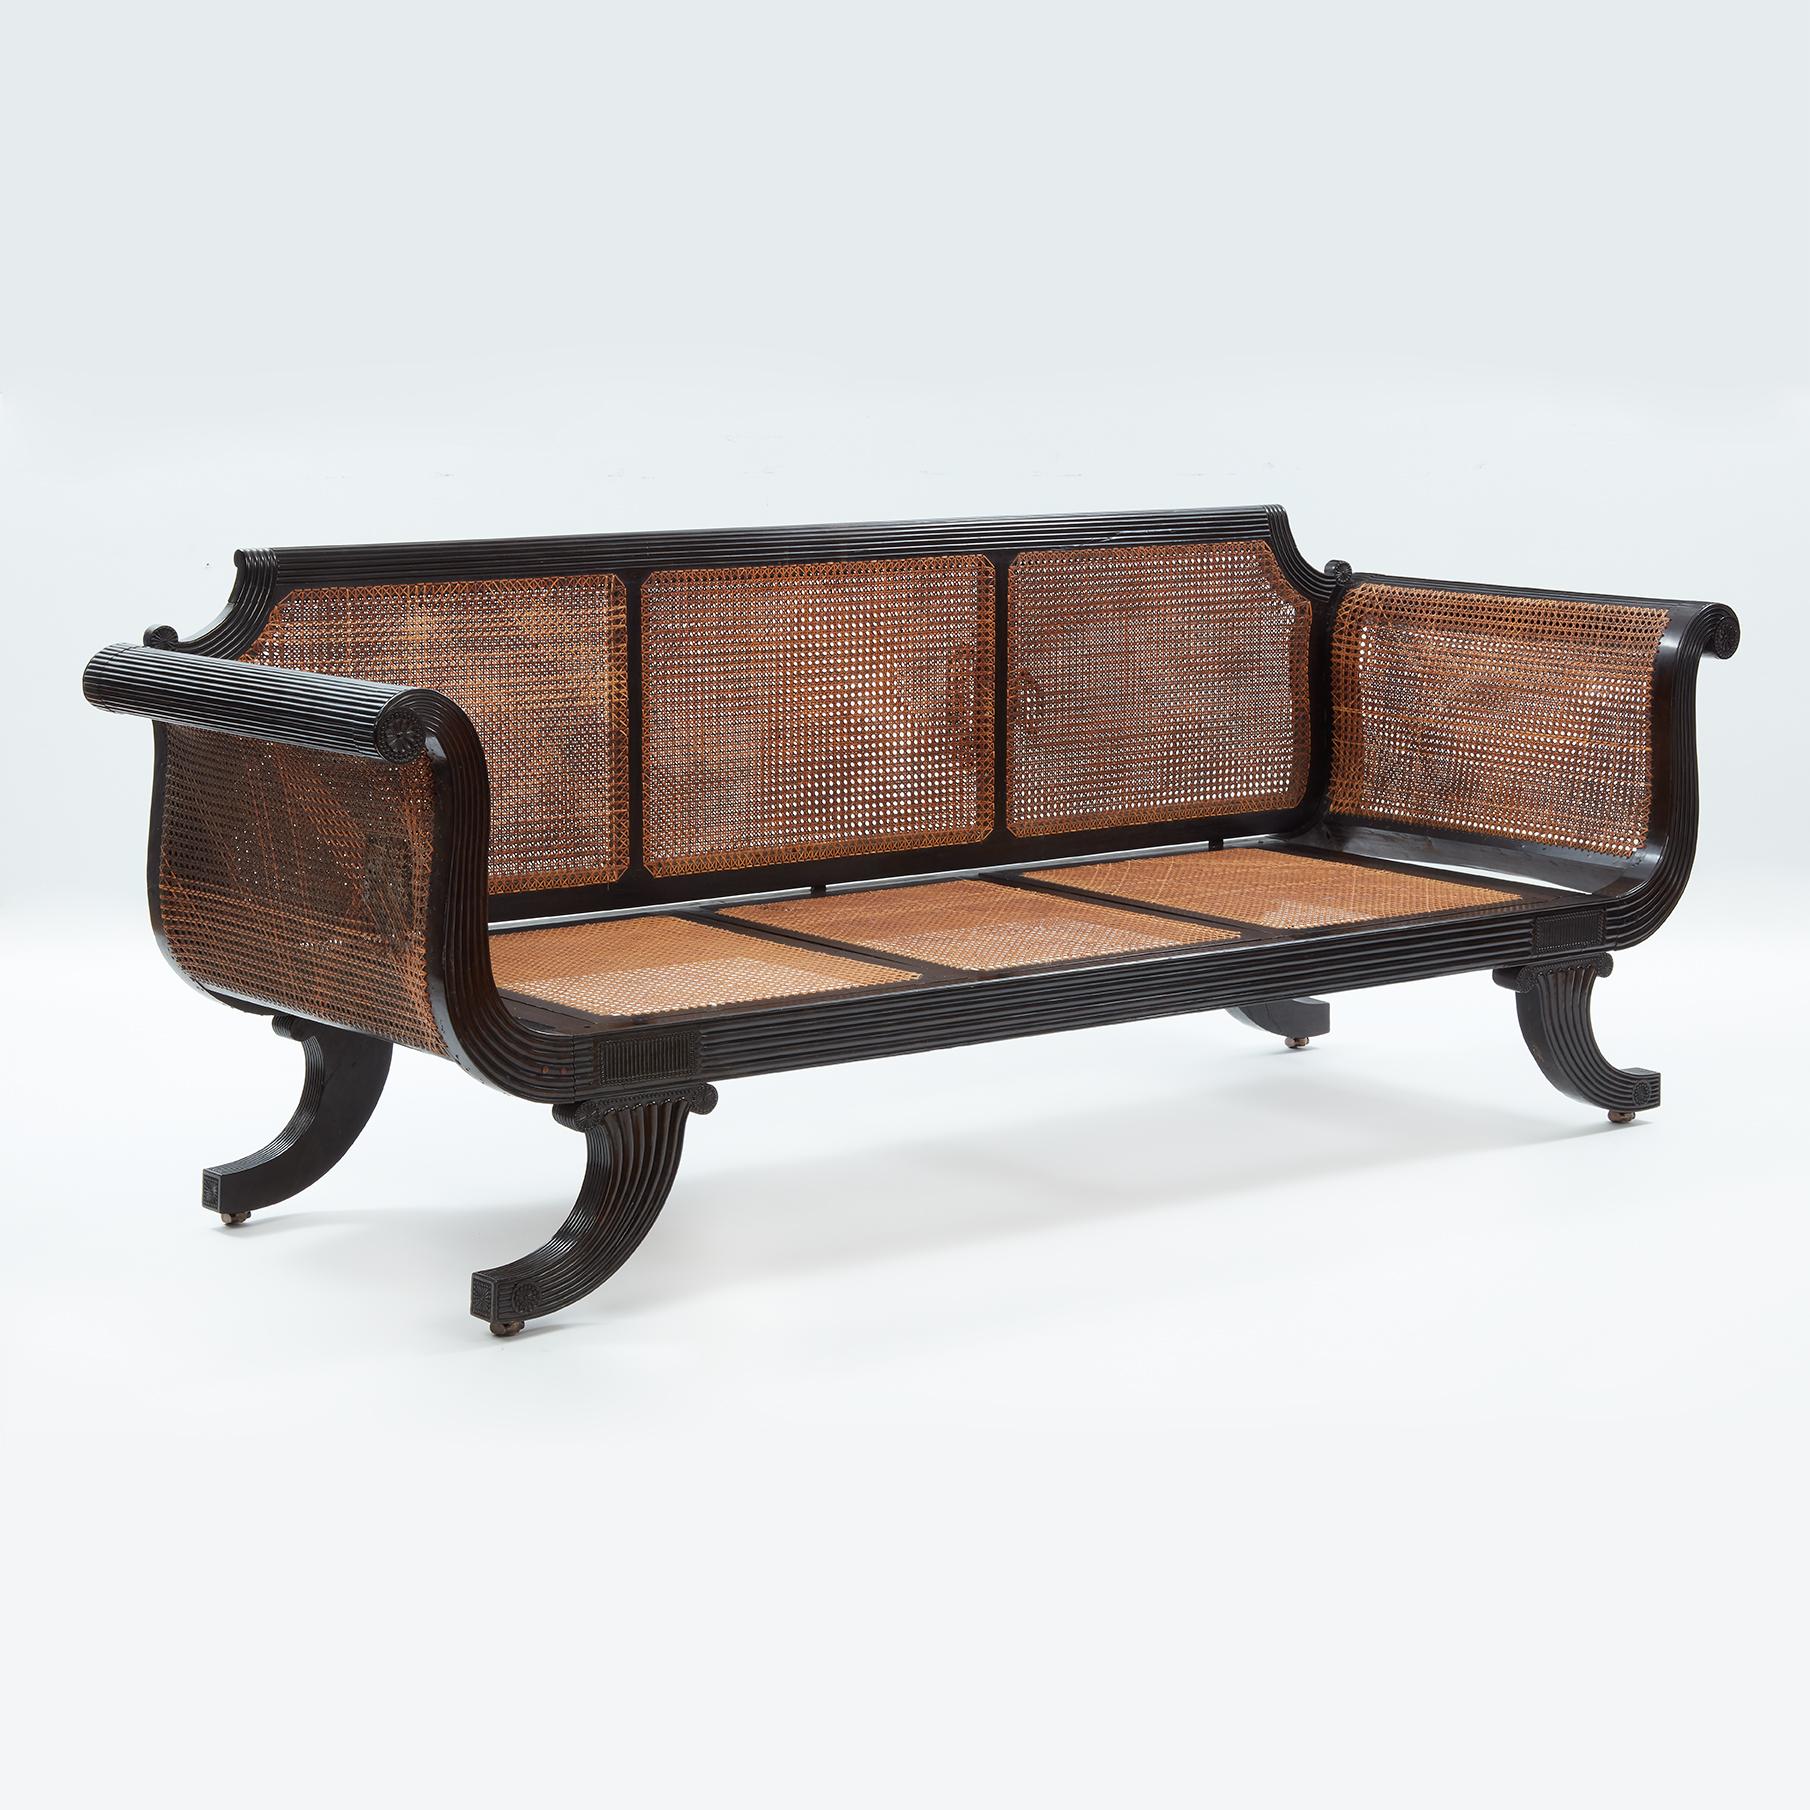 Ceylonese ebony framed sofa in regency style Circa 1830. Caned seats and back.